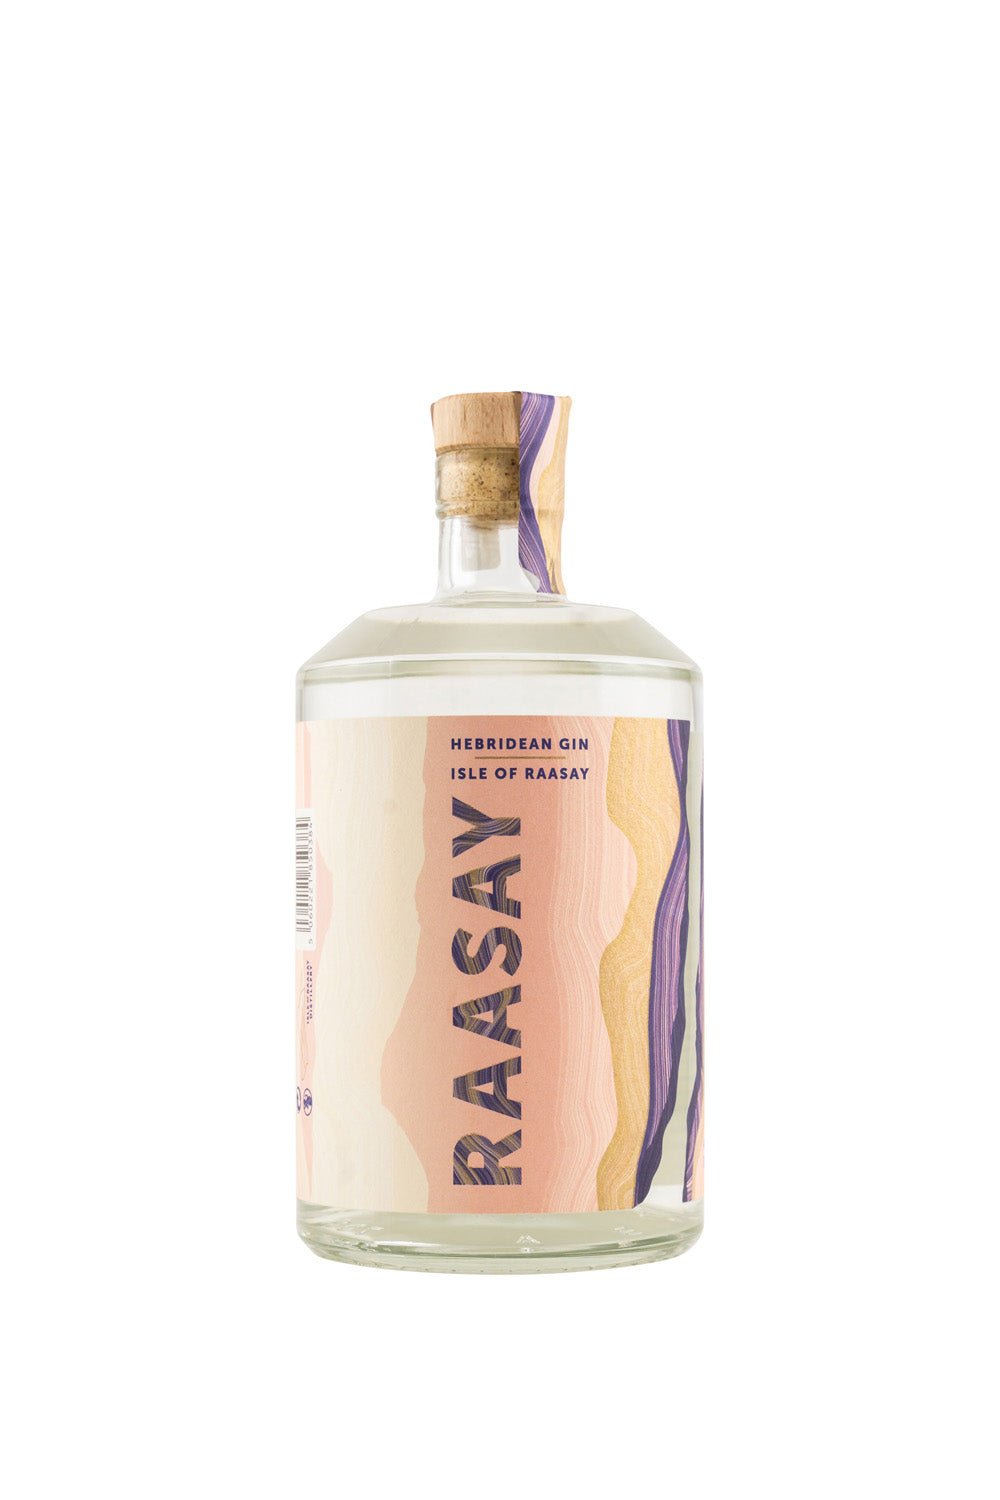 Raasay Hebridean Dry Gin 46% vol. 700ml - Maltimore